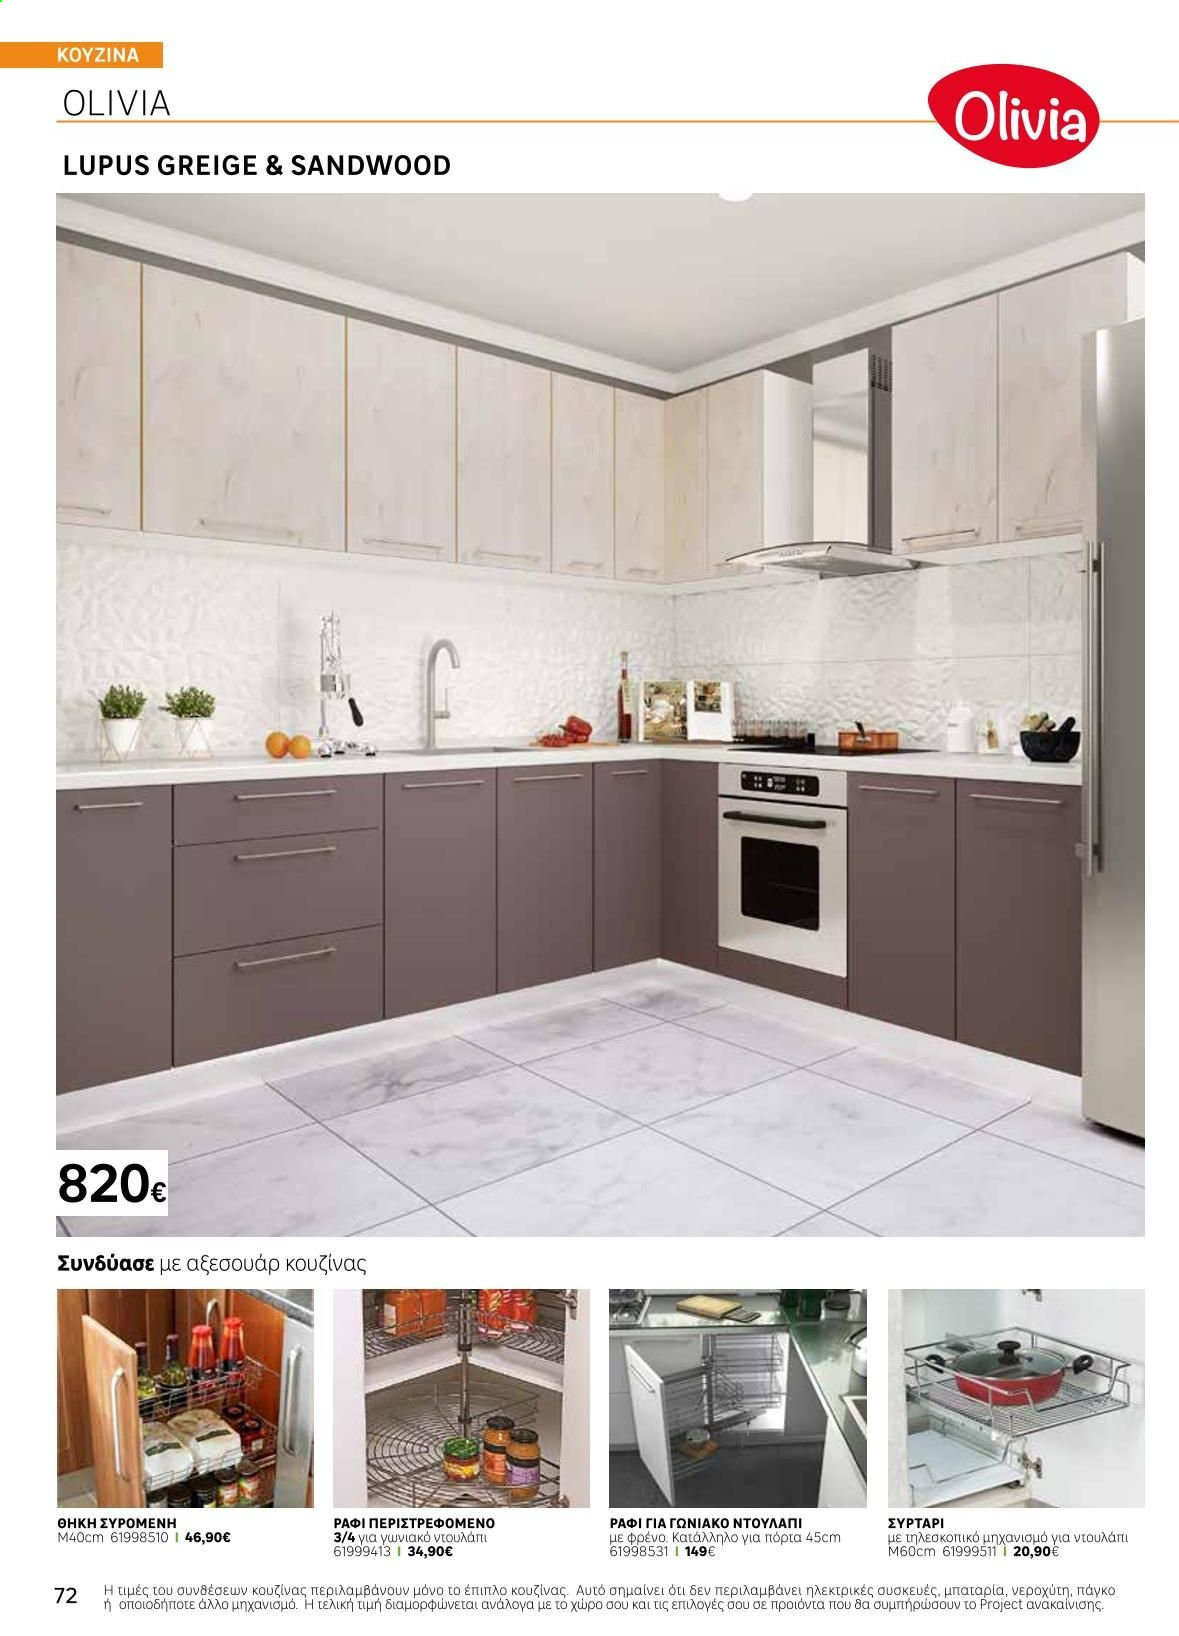 thumbnail - Φυλλάδια Leroy Merlin - Εκπτωτικά προϊόντα - συρταρι, κουζινας, νεροχύτη. Σελίδα 72.